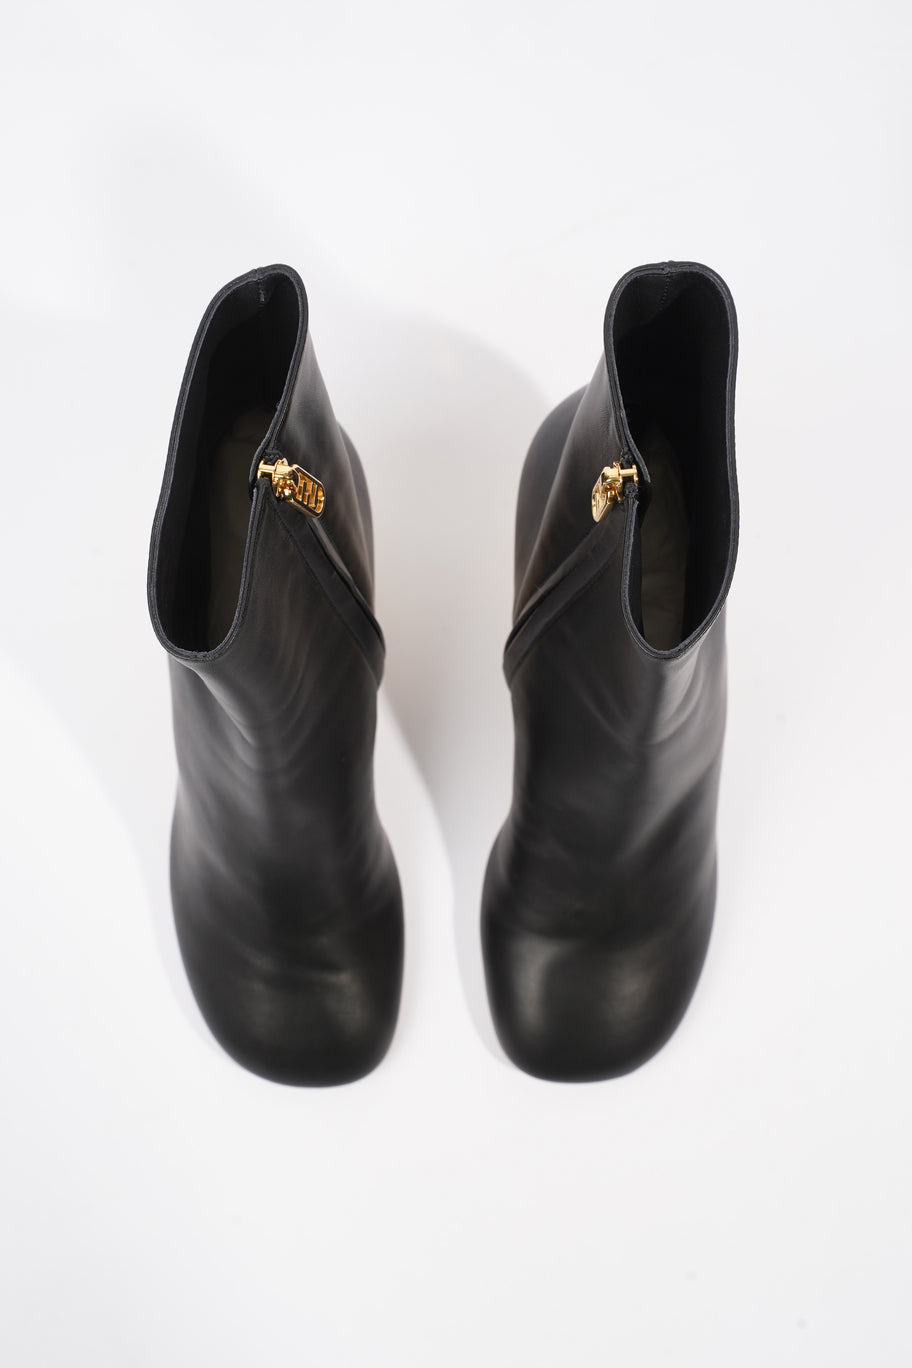 Fendi First Boots Black Leather EU 39 UK 6 Image 8